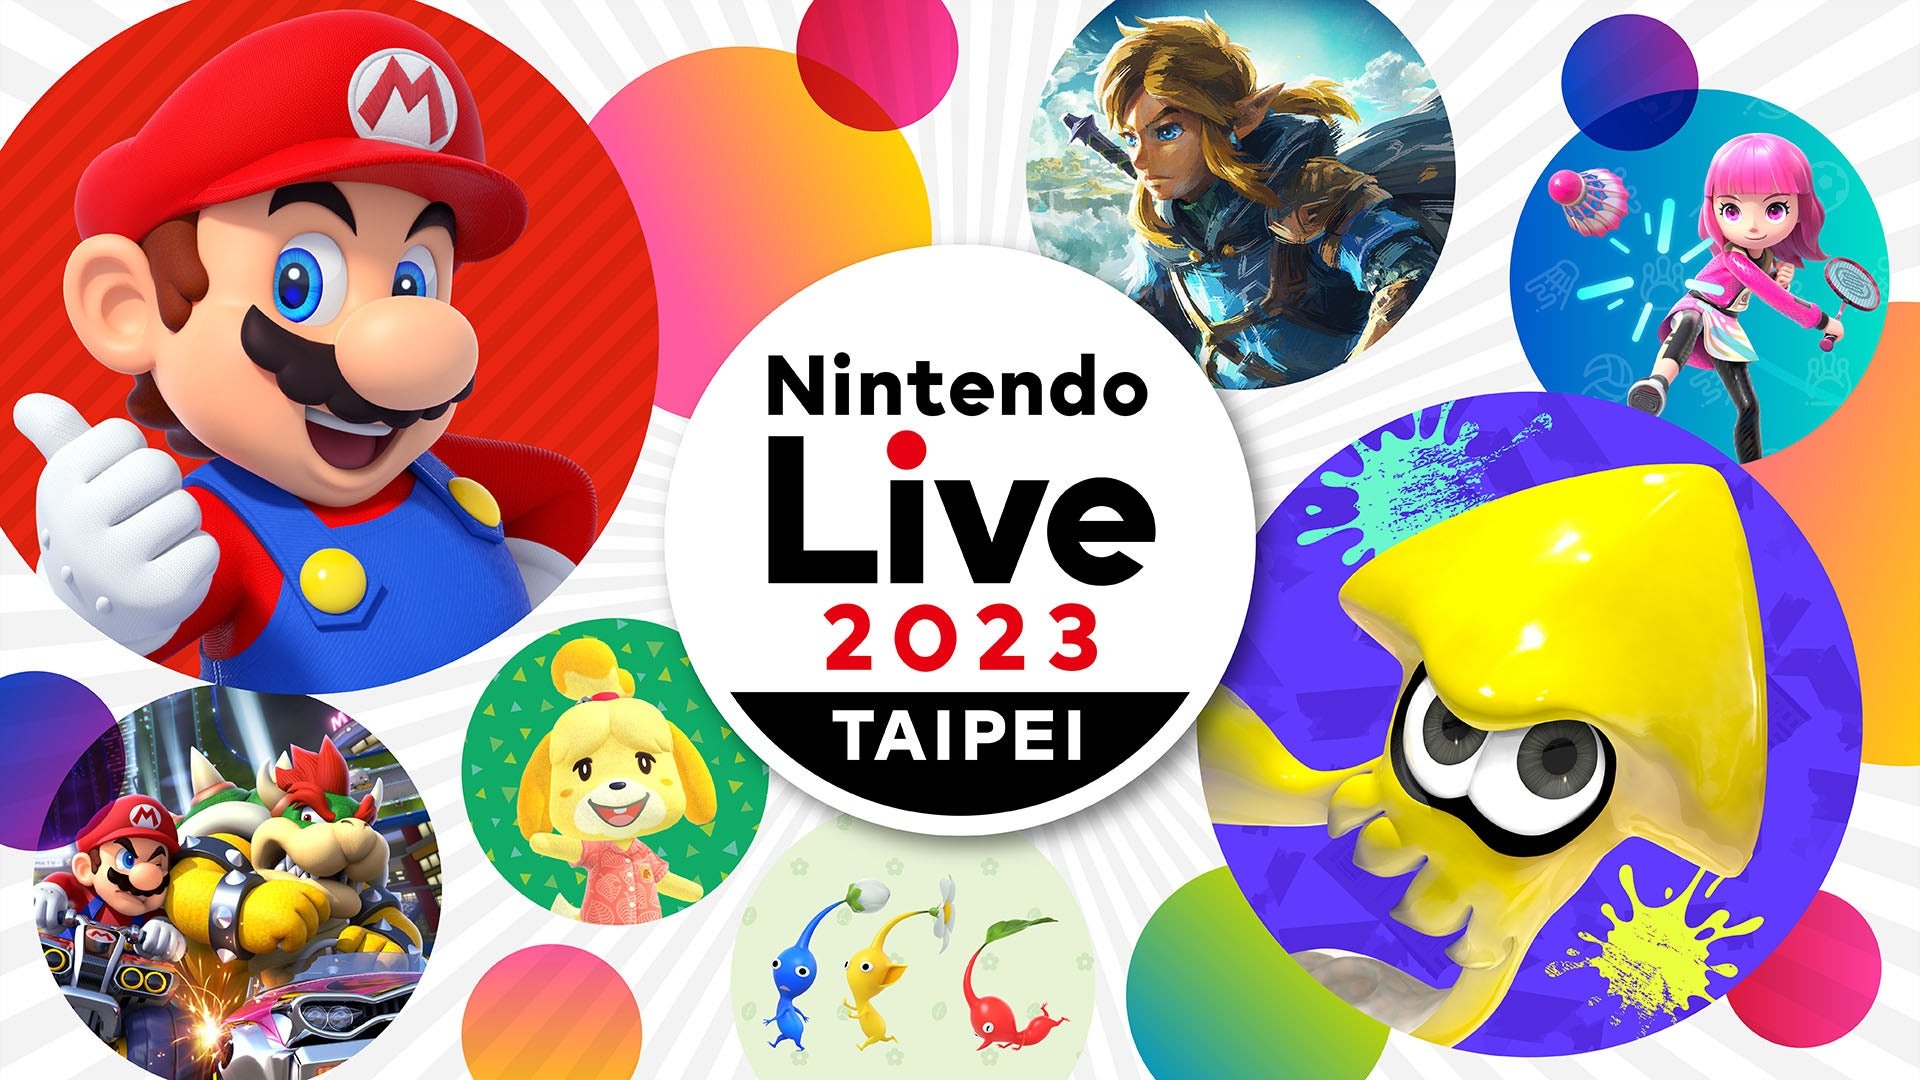 Nintendo Live 2023 TAIPEI 入场票券将于 10 月 14 日、28 日分两梯次开放预约